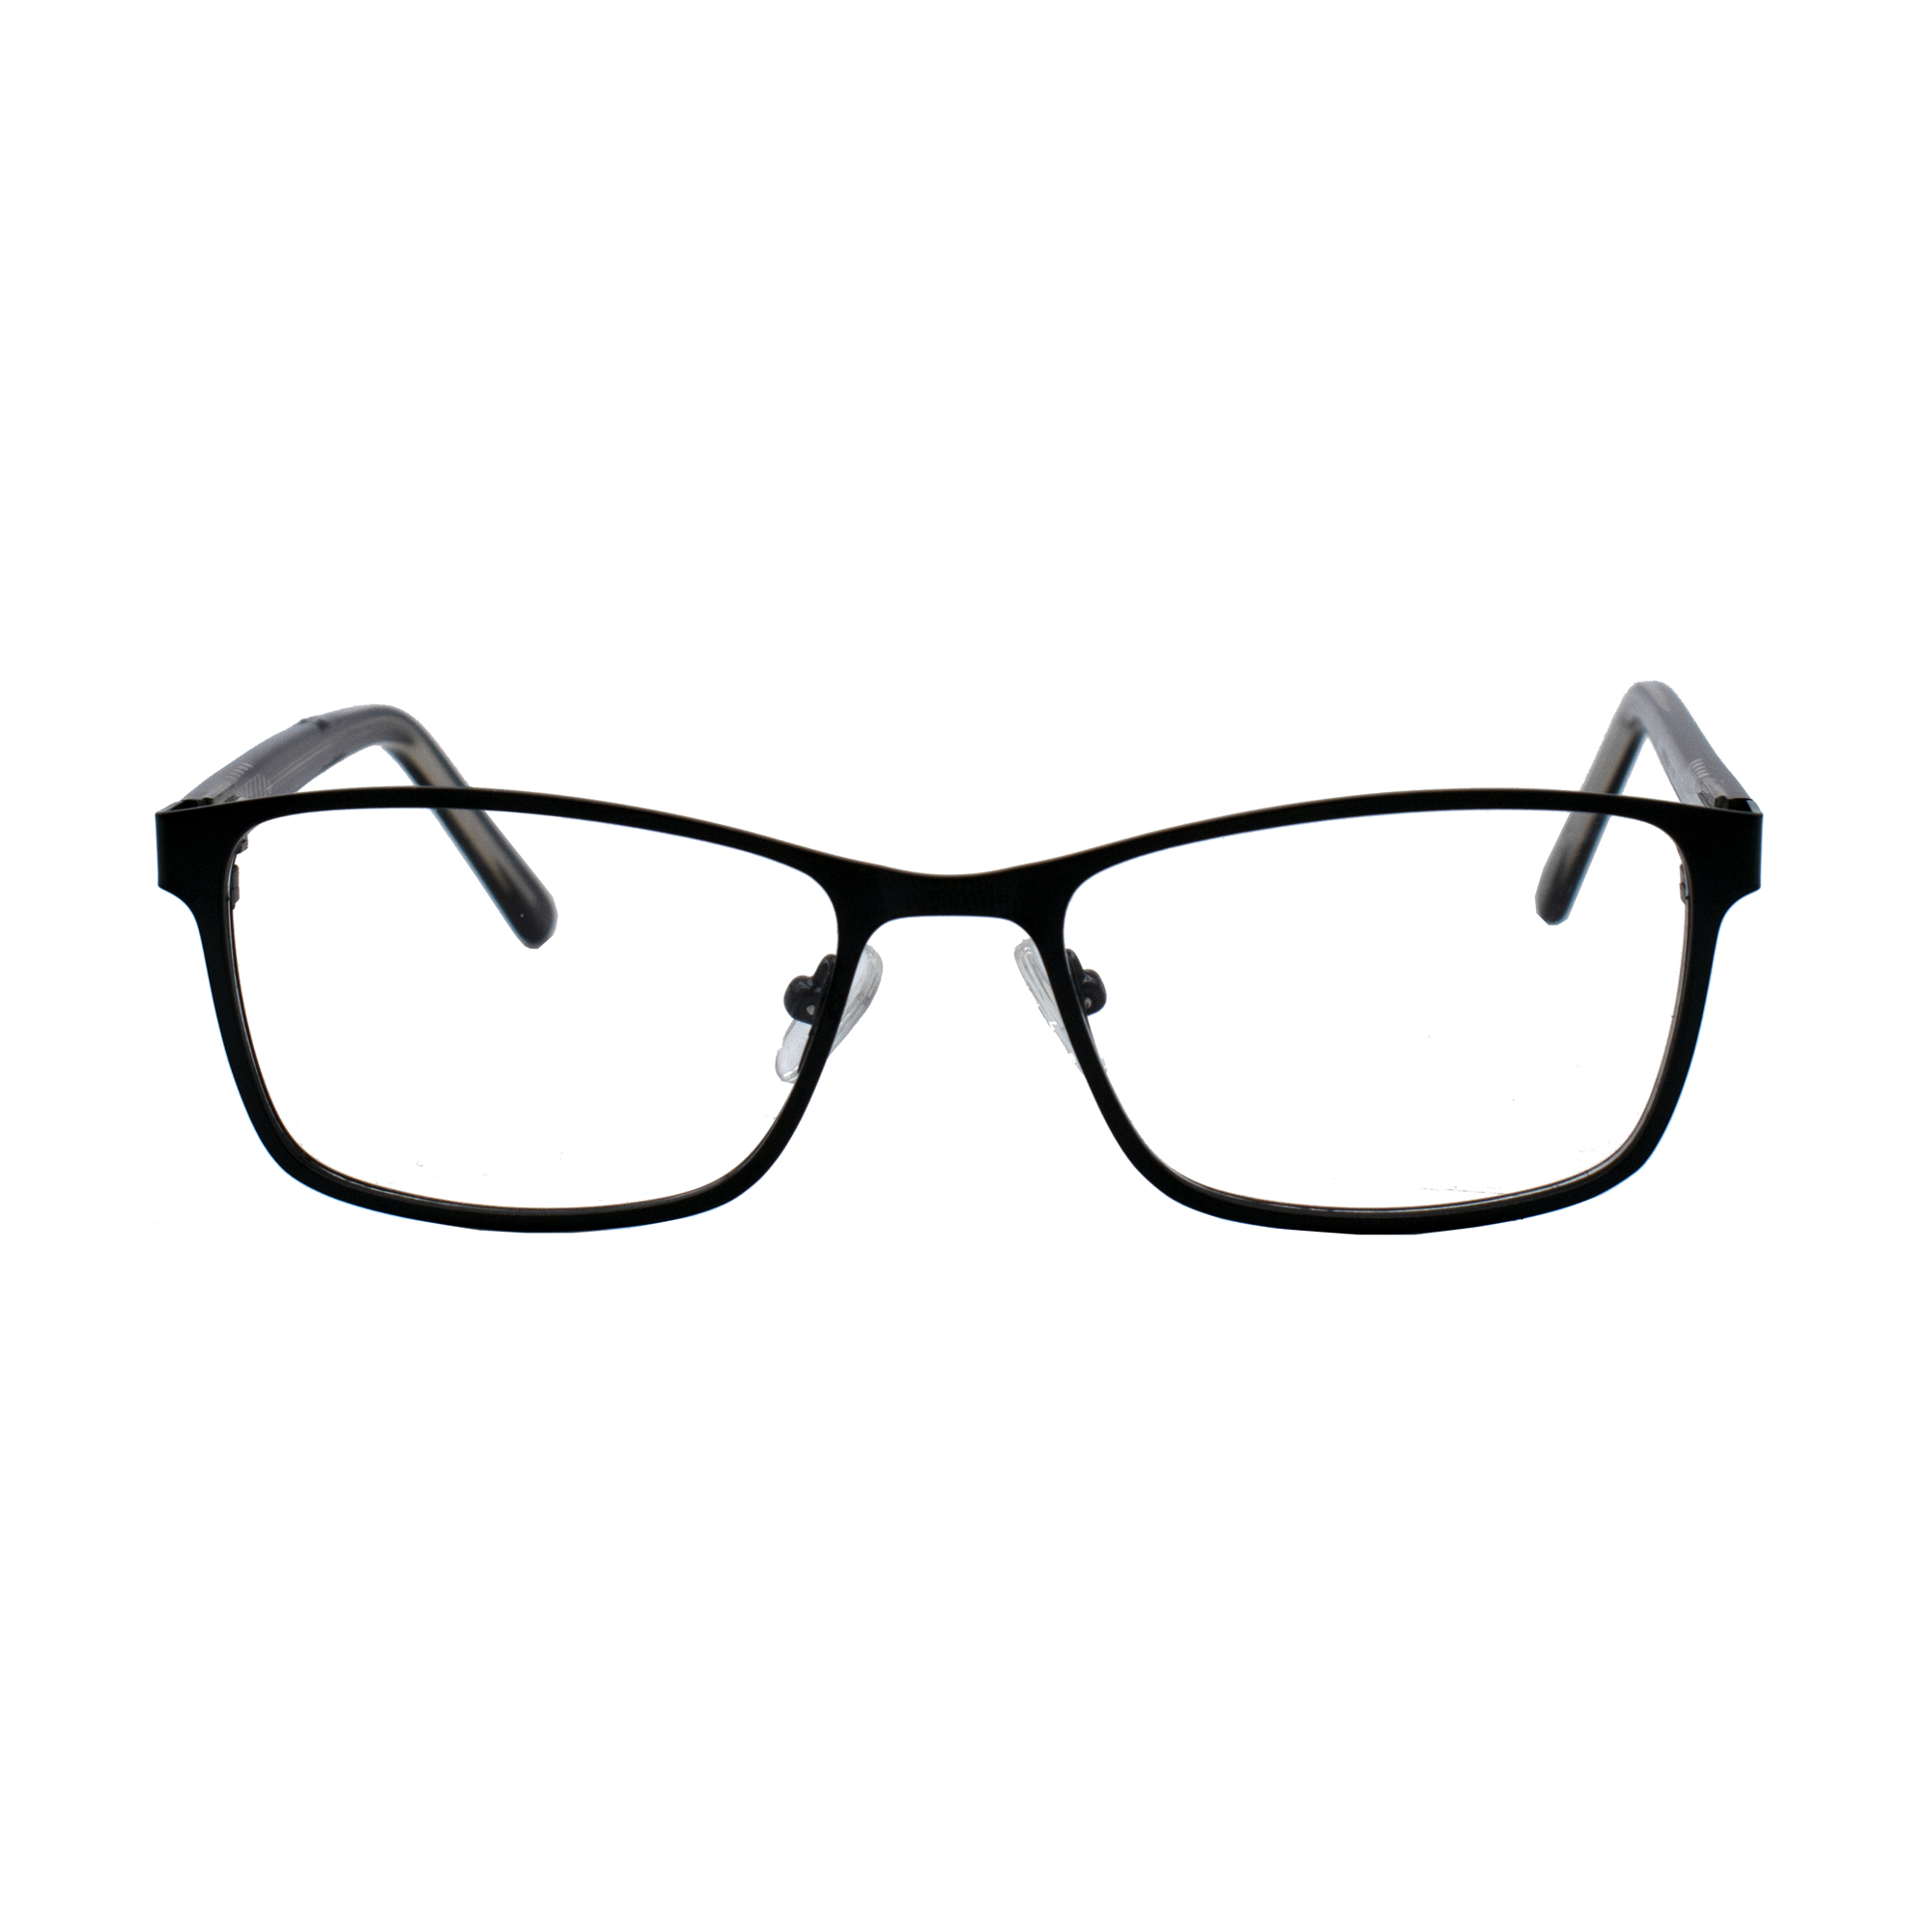 Walmart Women's Rx'able Eyeglasses, WM200951-1, Black, 51-17-135 - image 1 of 12